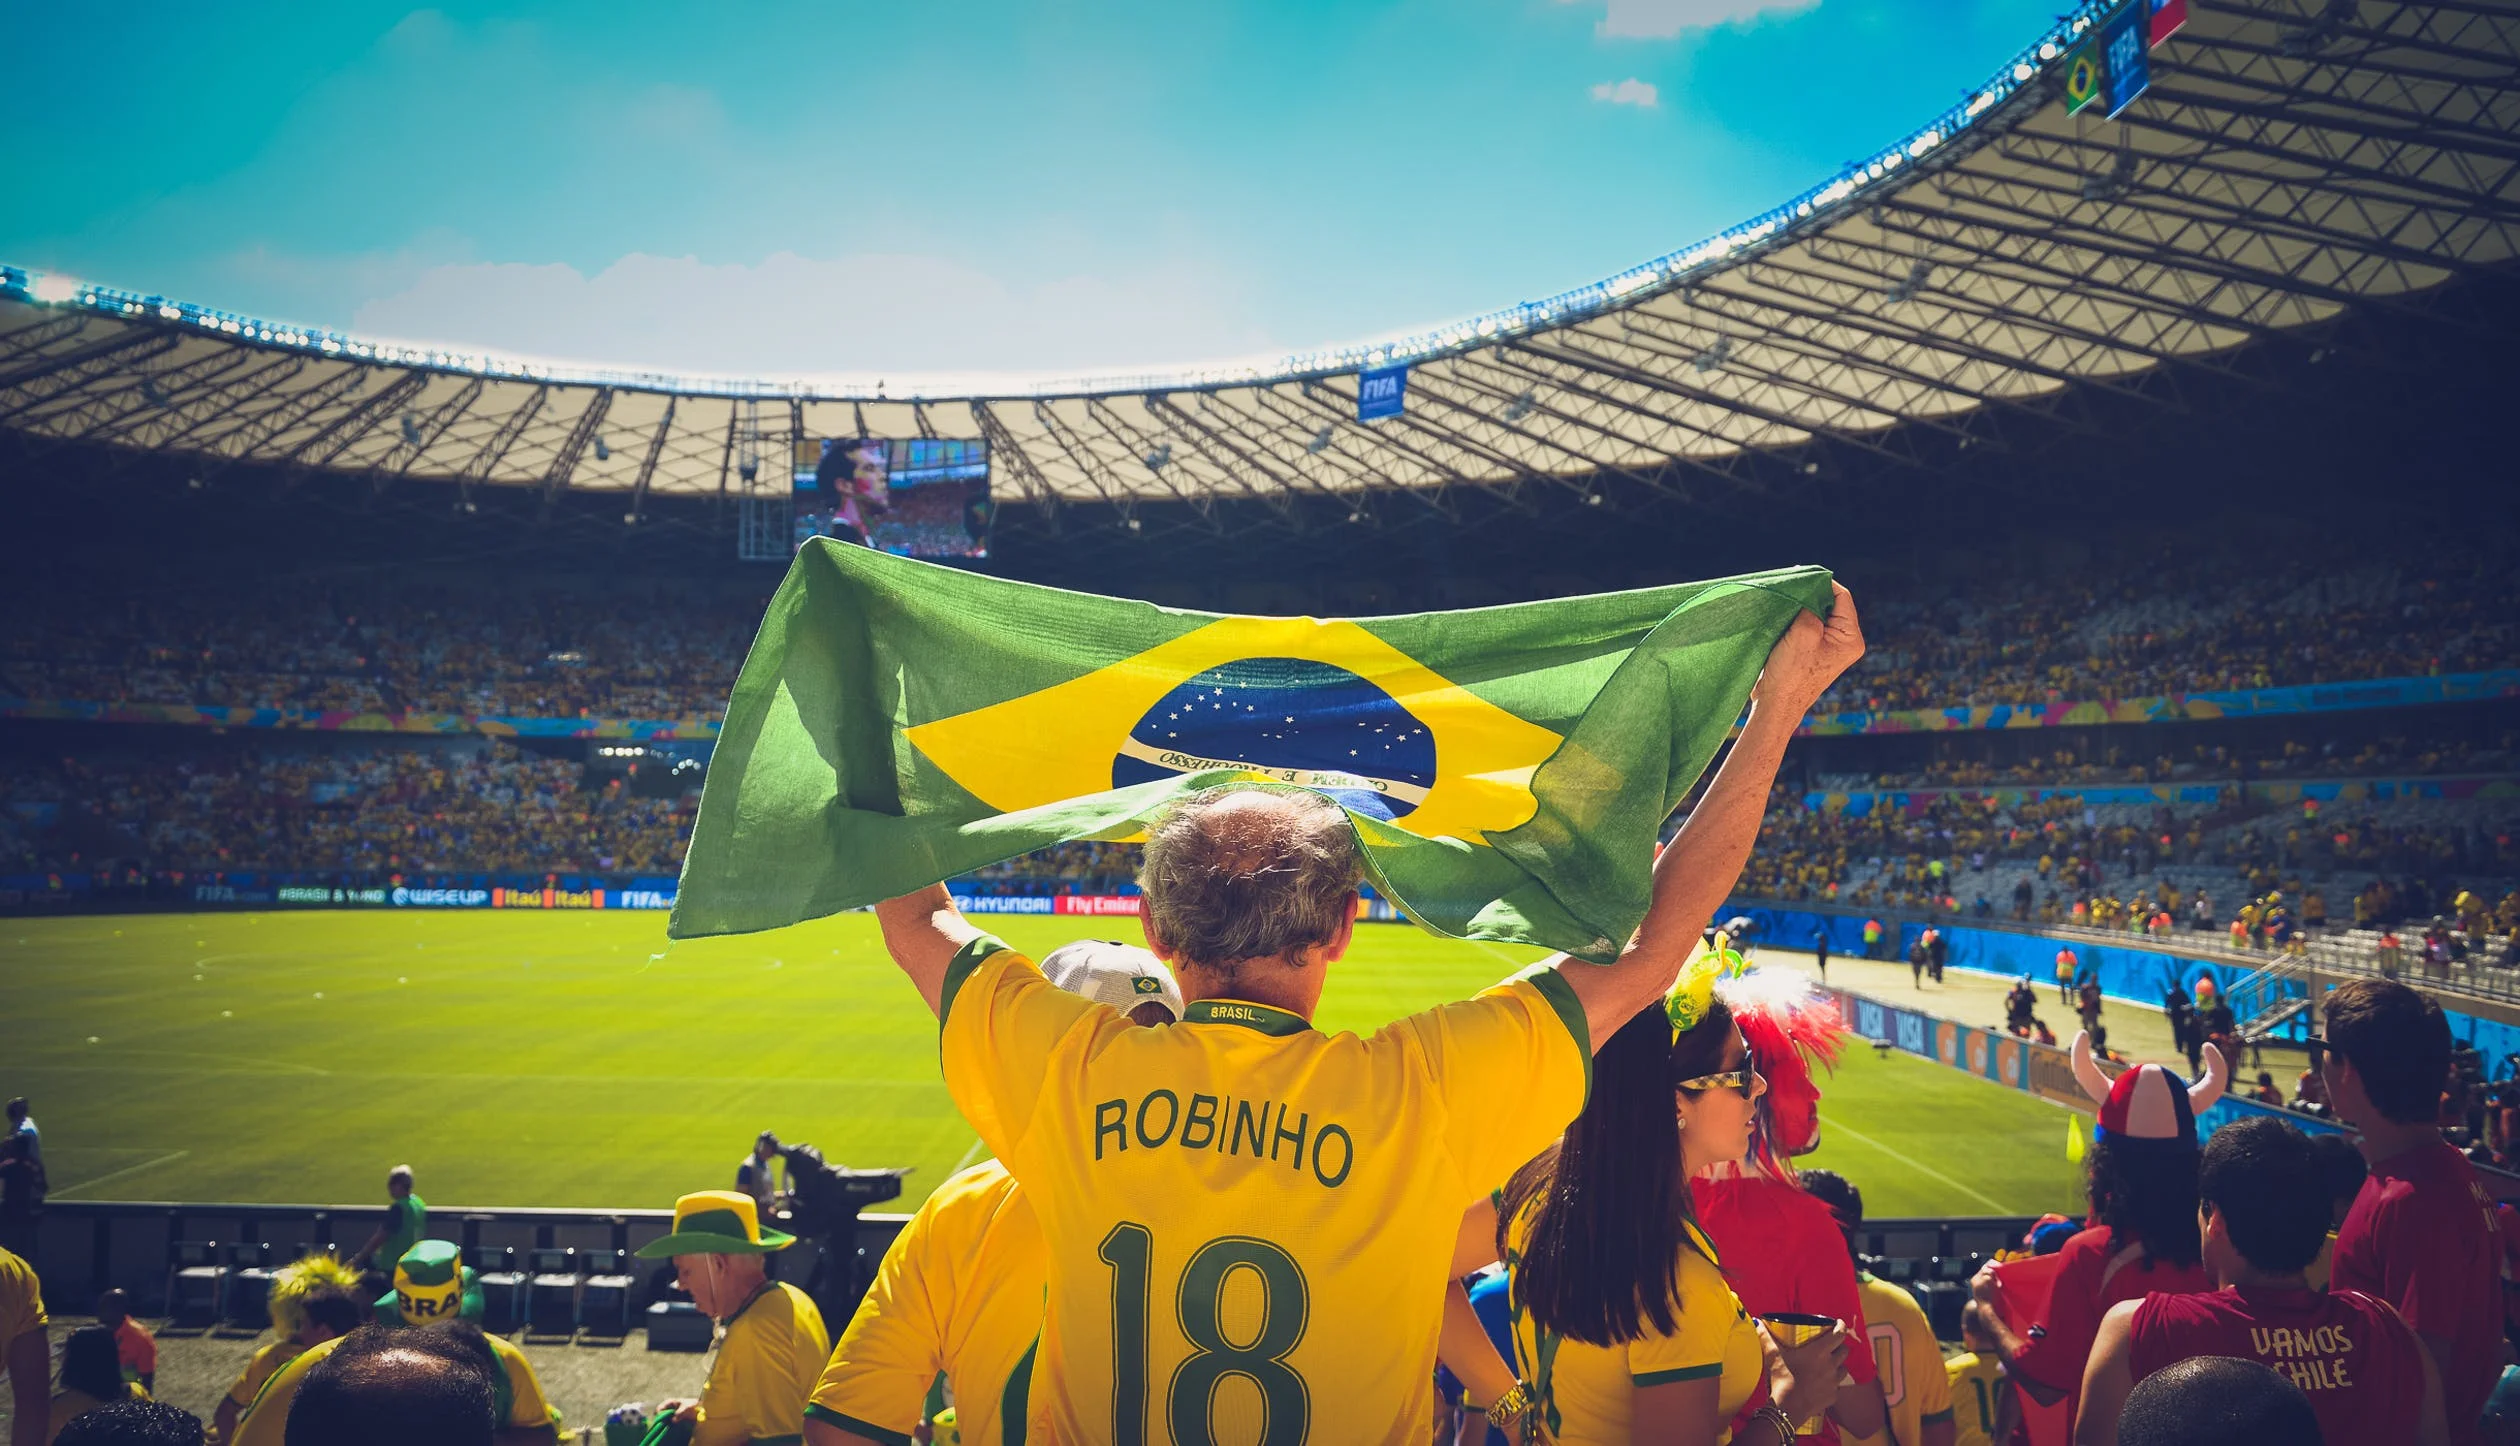 brazil soccer uniform